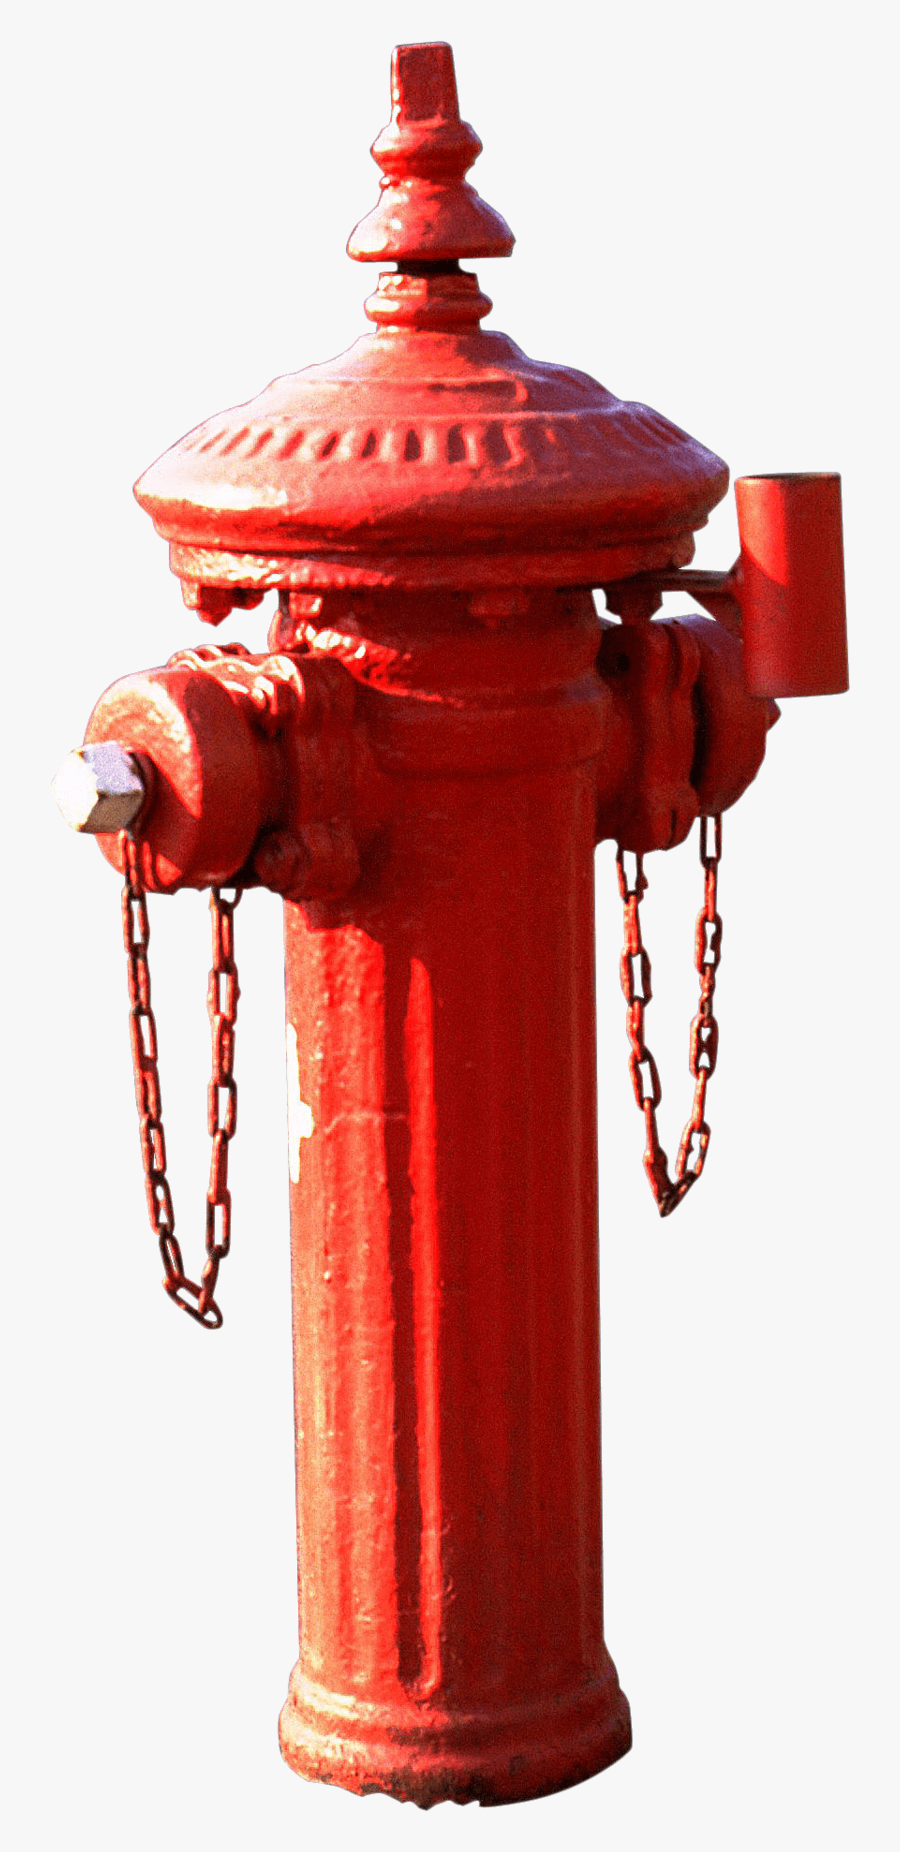 Fire-hydrant - Гидрант Пнг, Transparent Clipart